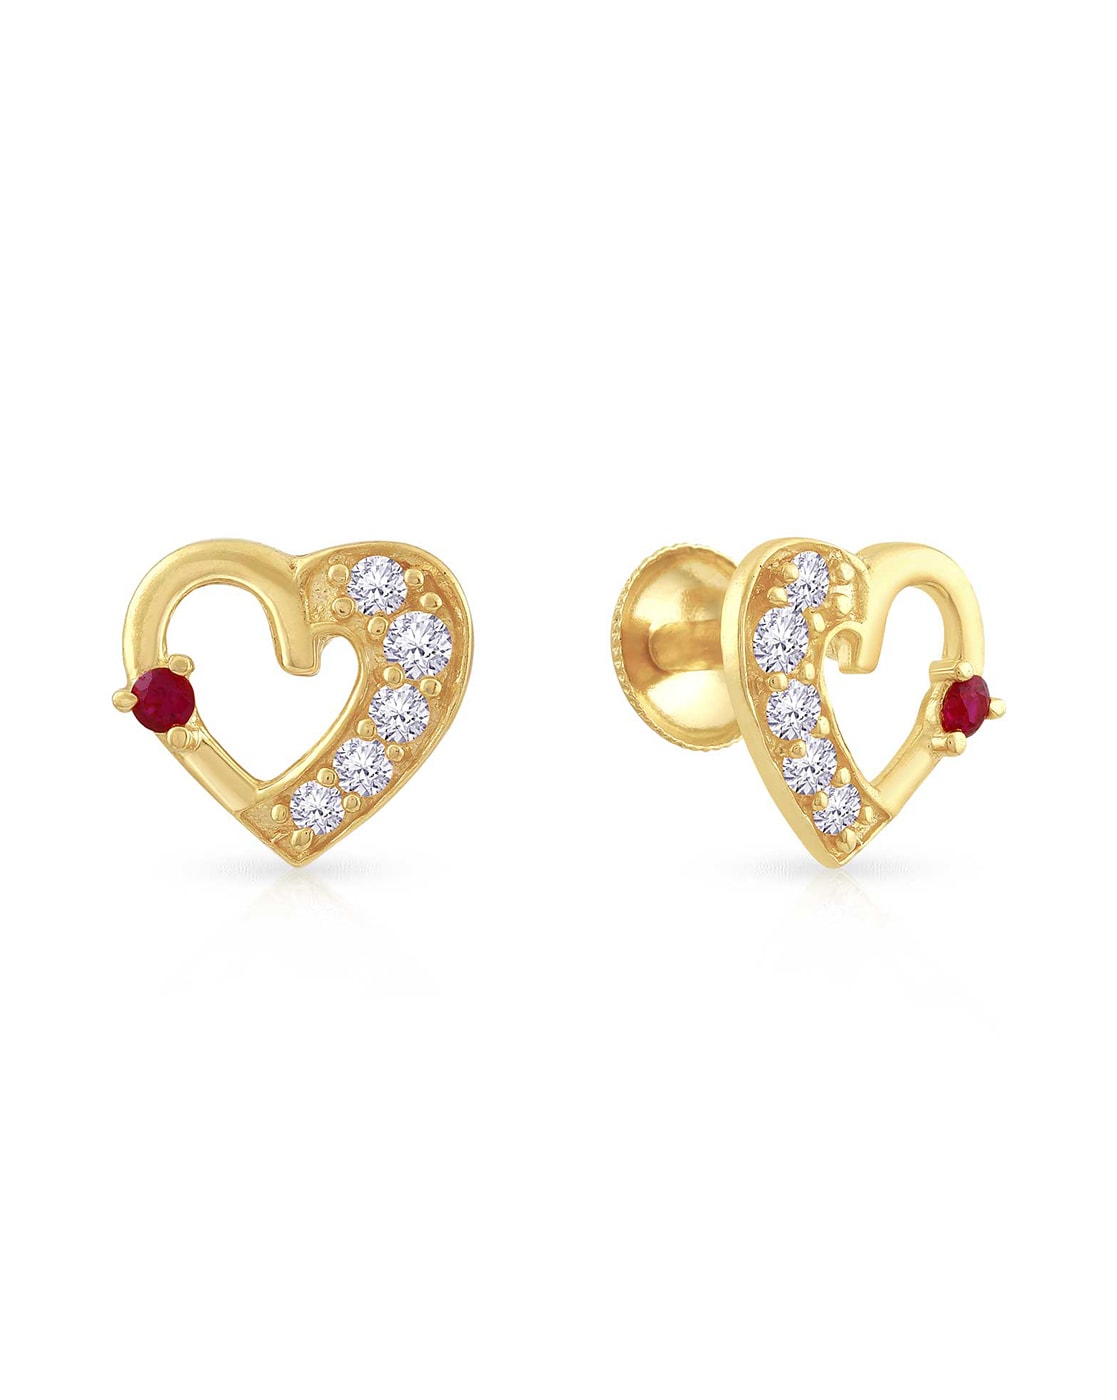 Starstruck Studs Diamond Earrings | Buy Diamond earrings online at  rinayra.com